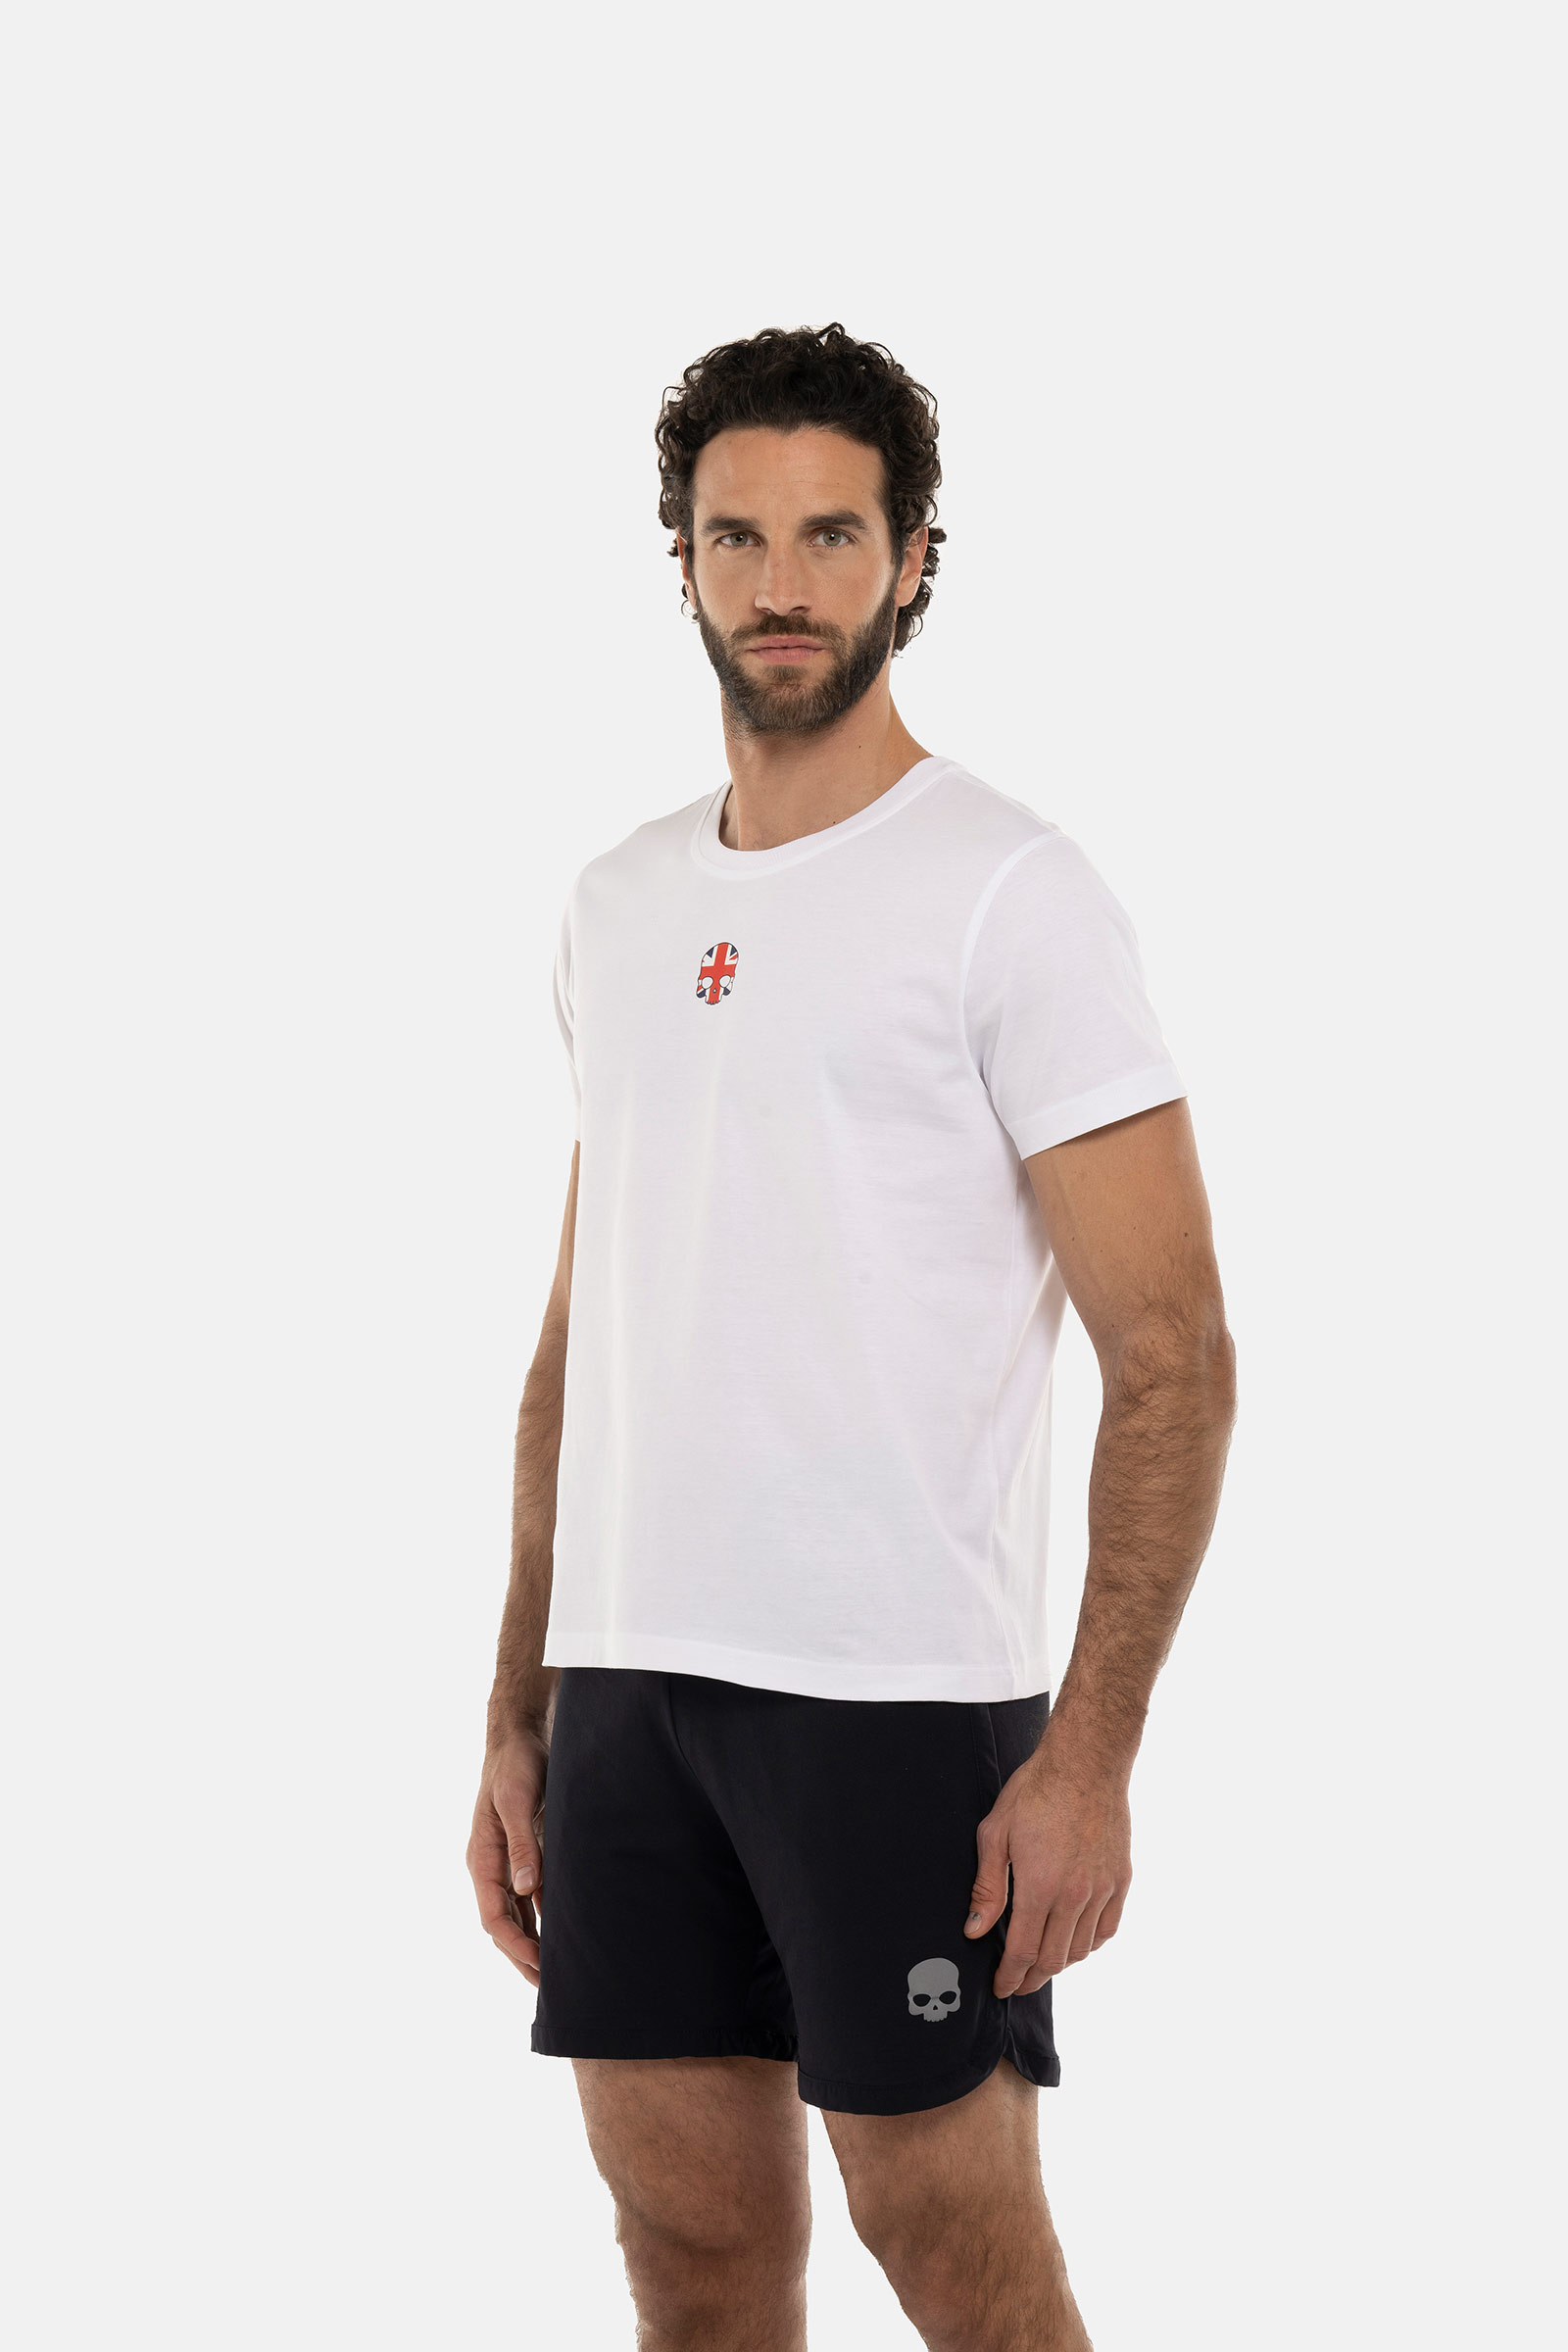 MATCH T-SHIRT - WHITE - Hydrogen - Luxury Sportwear